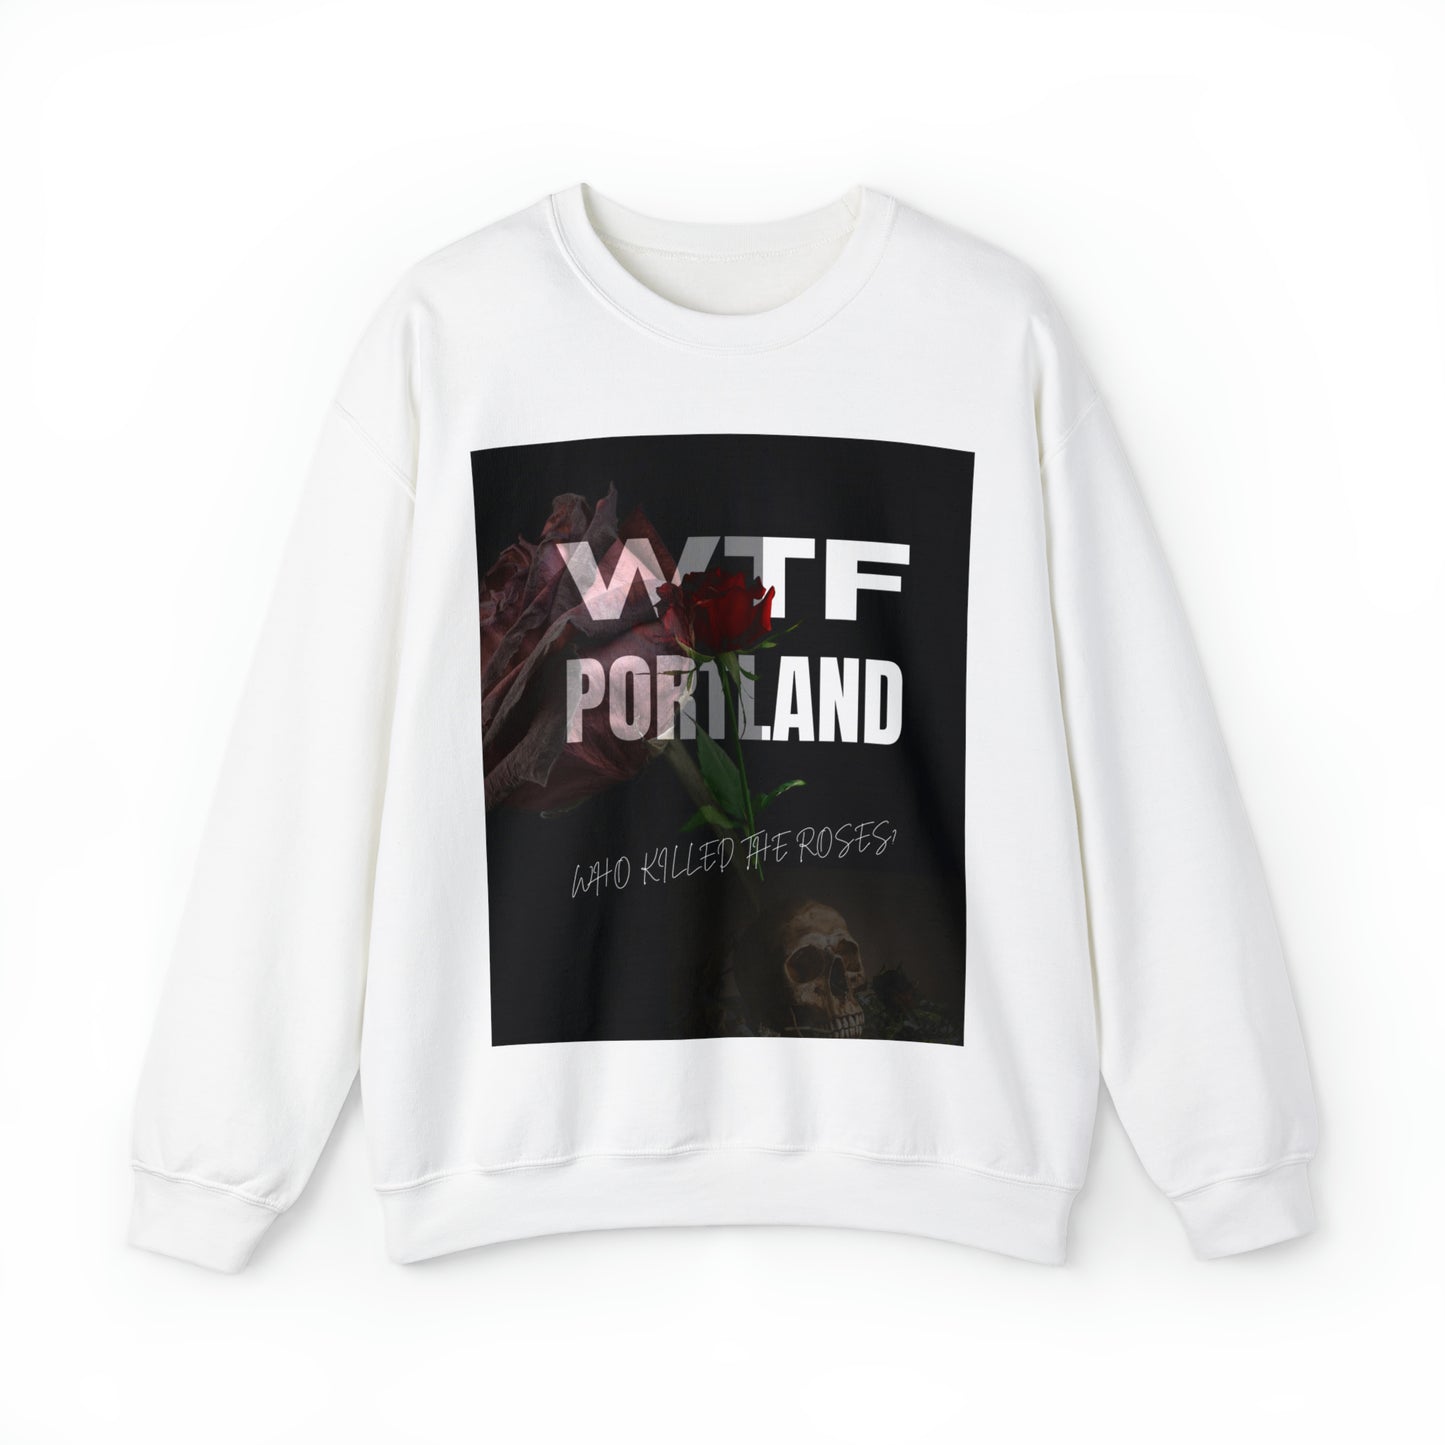 WTF PORTLAND - "Who Killed The Roses" Crewneck Sweatshirt